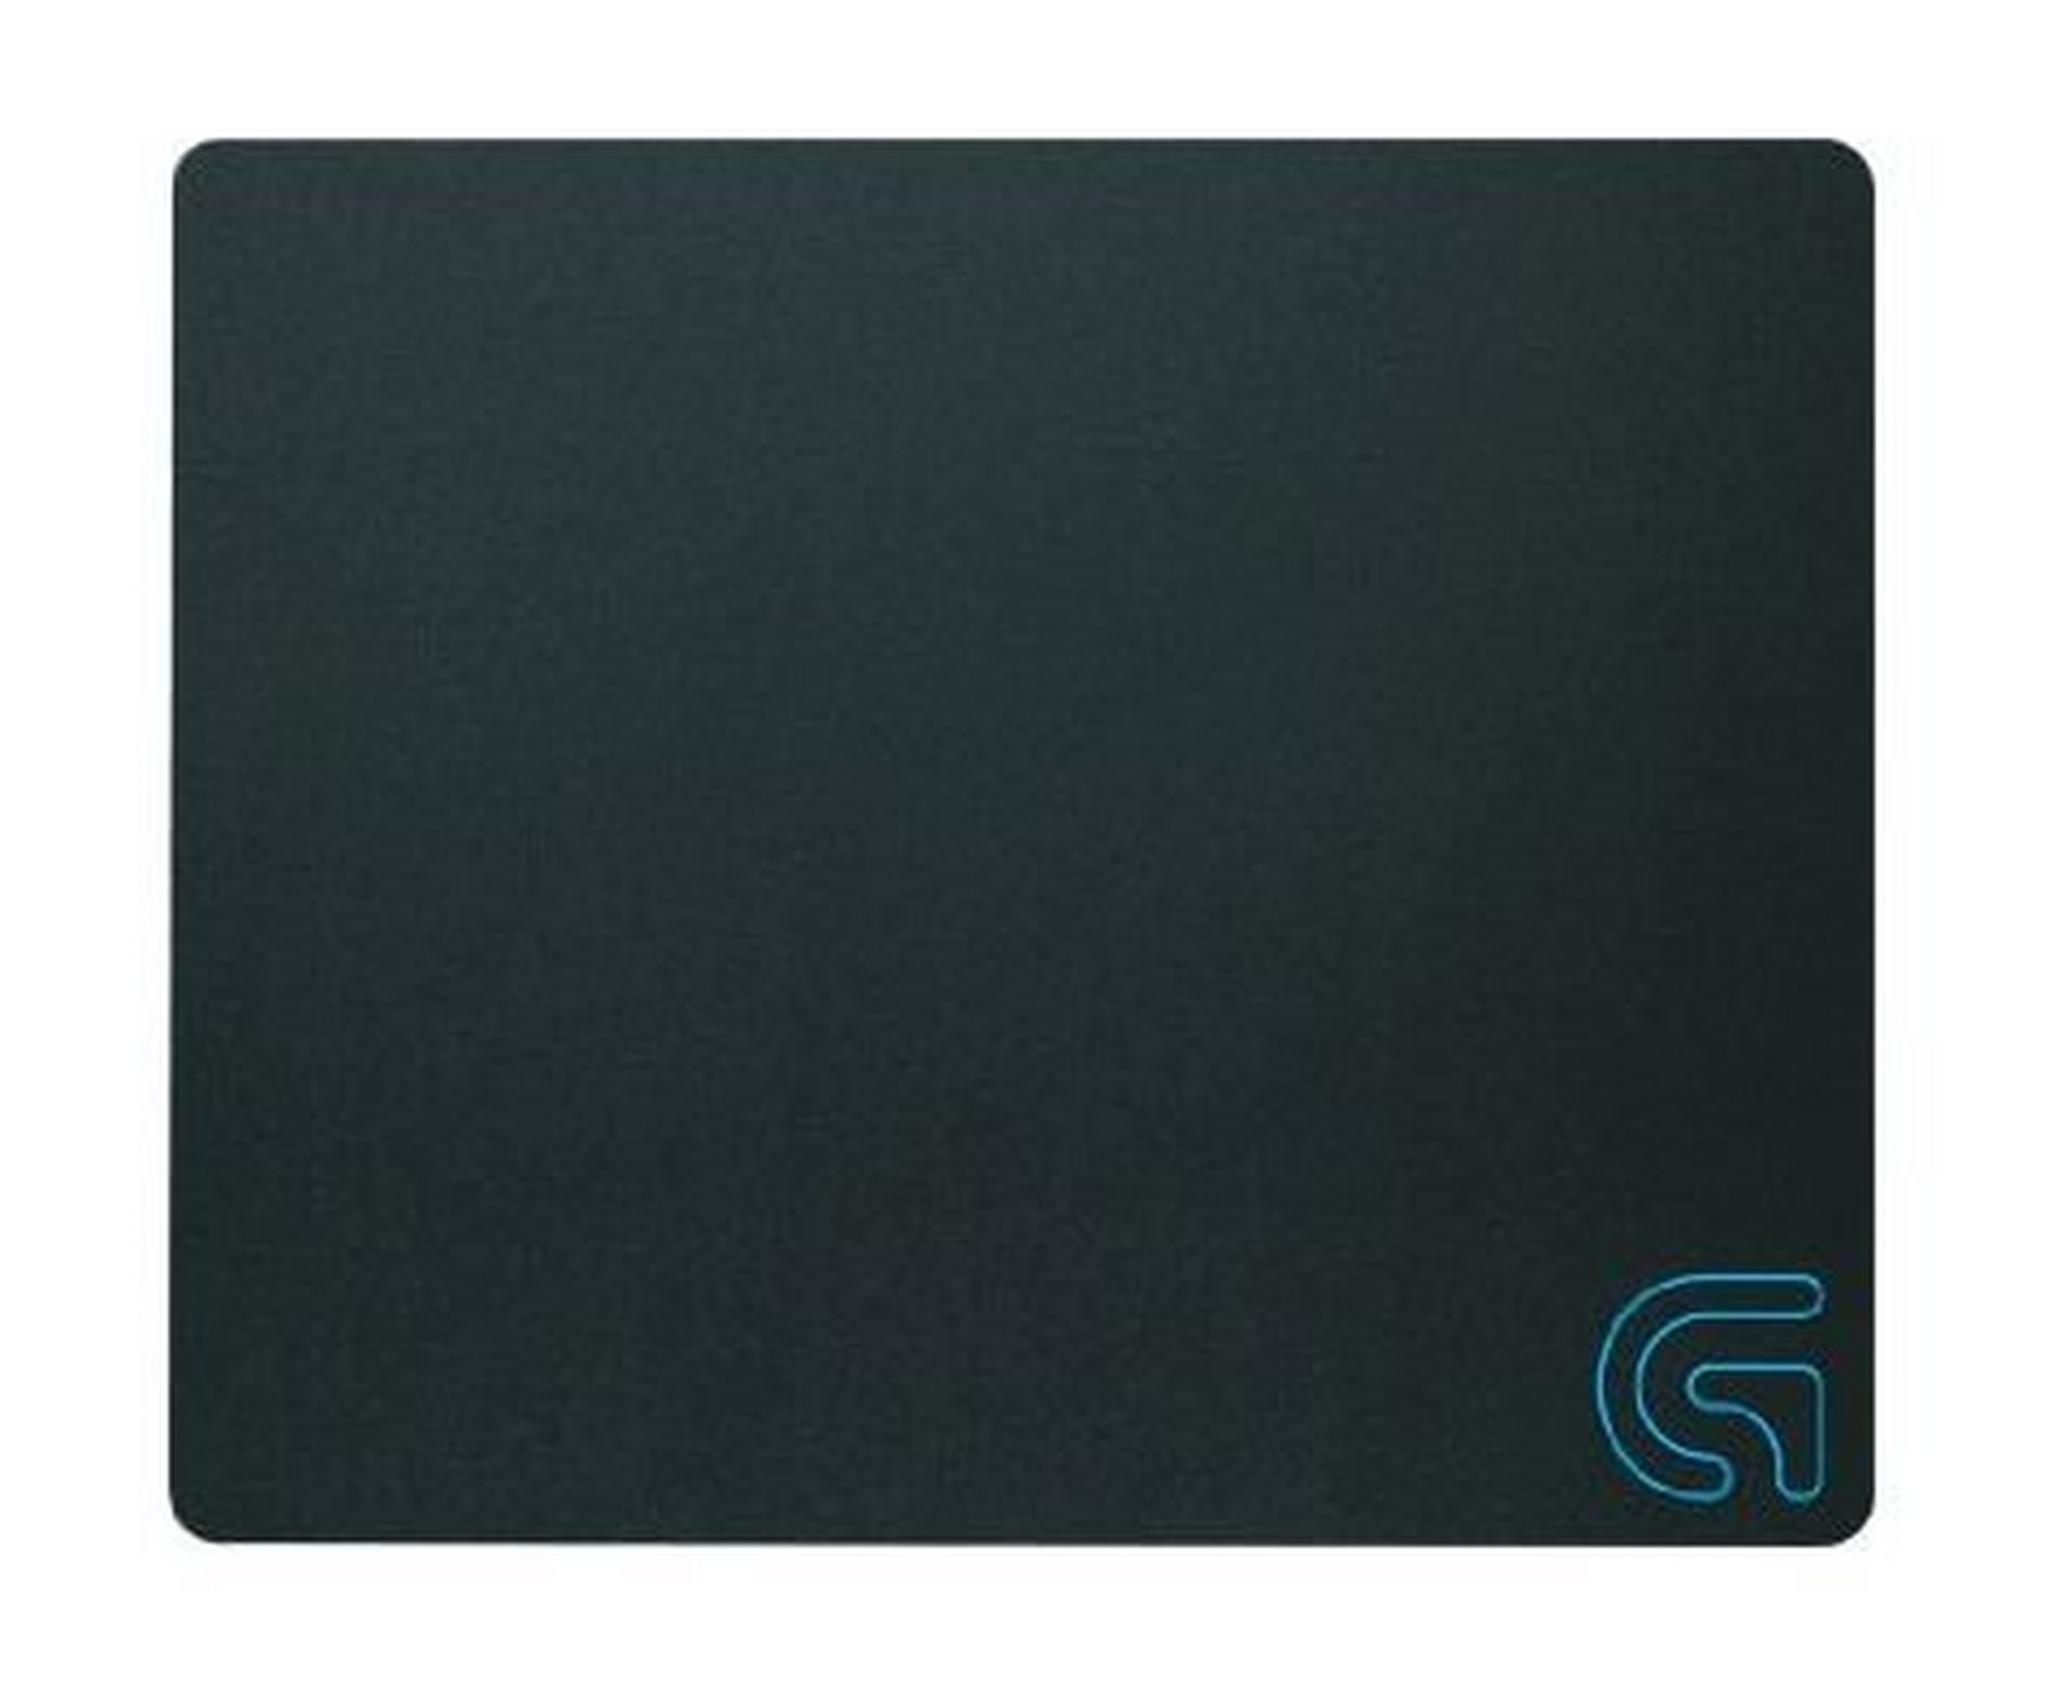 Logitech G440 Hard Gaming Mouse Pad – Black